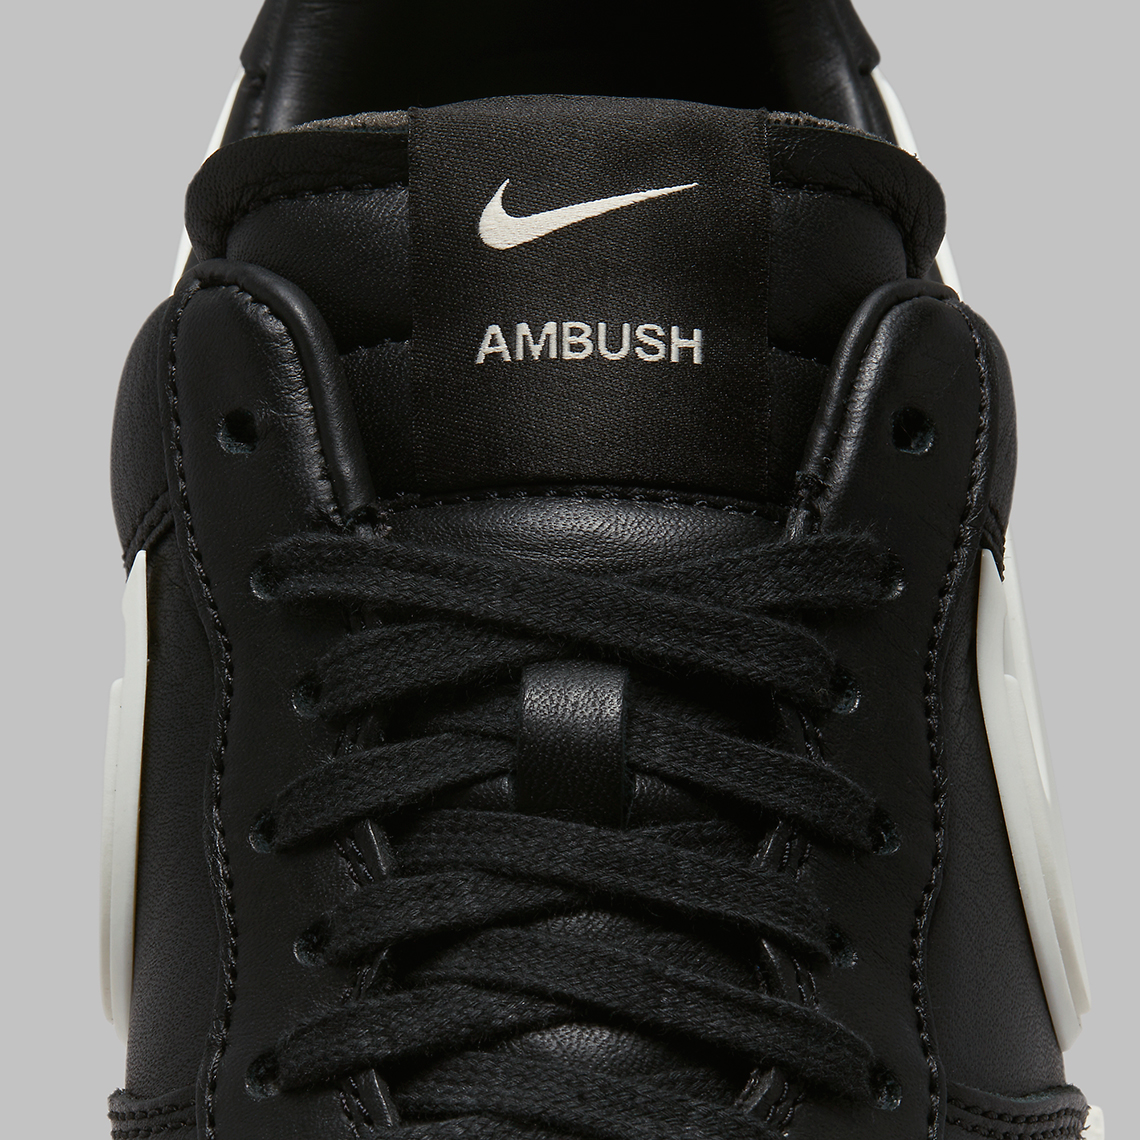 Ambush Nike Air Force 1 Low Black White Dv3464 001 2